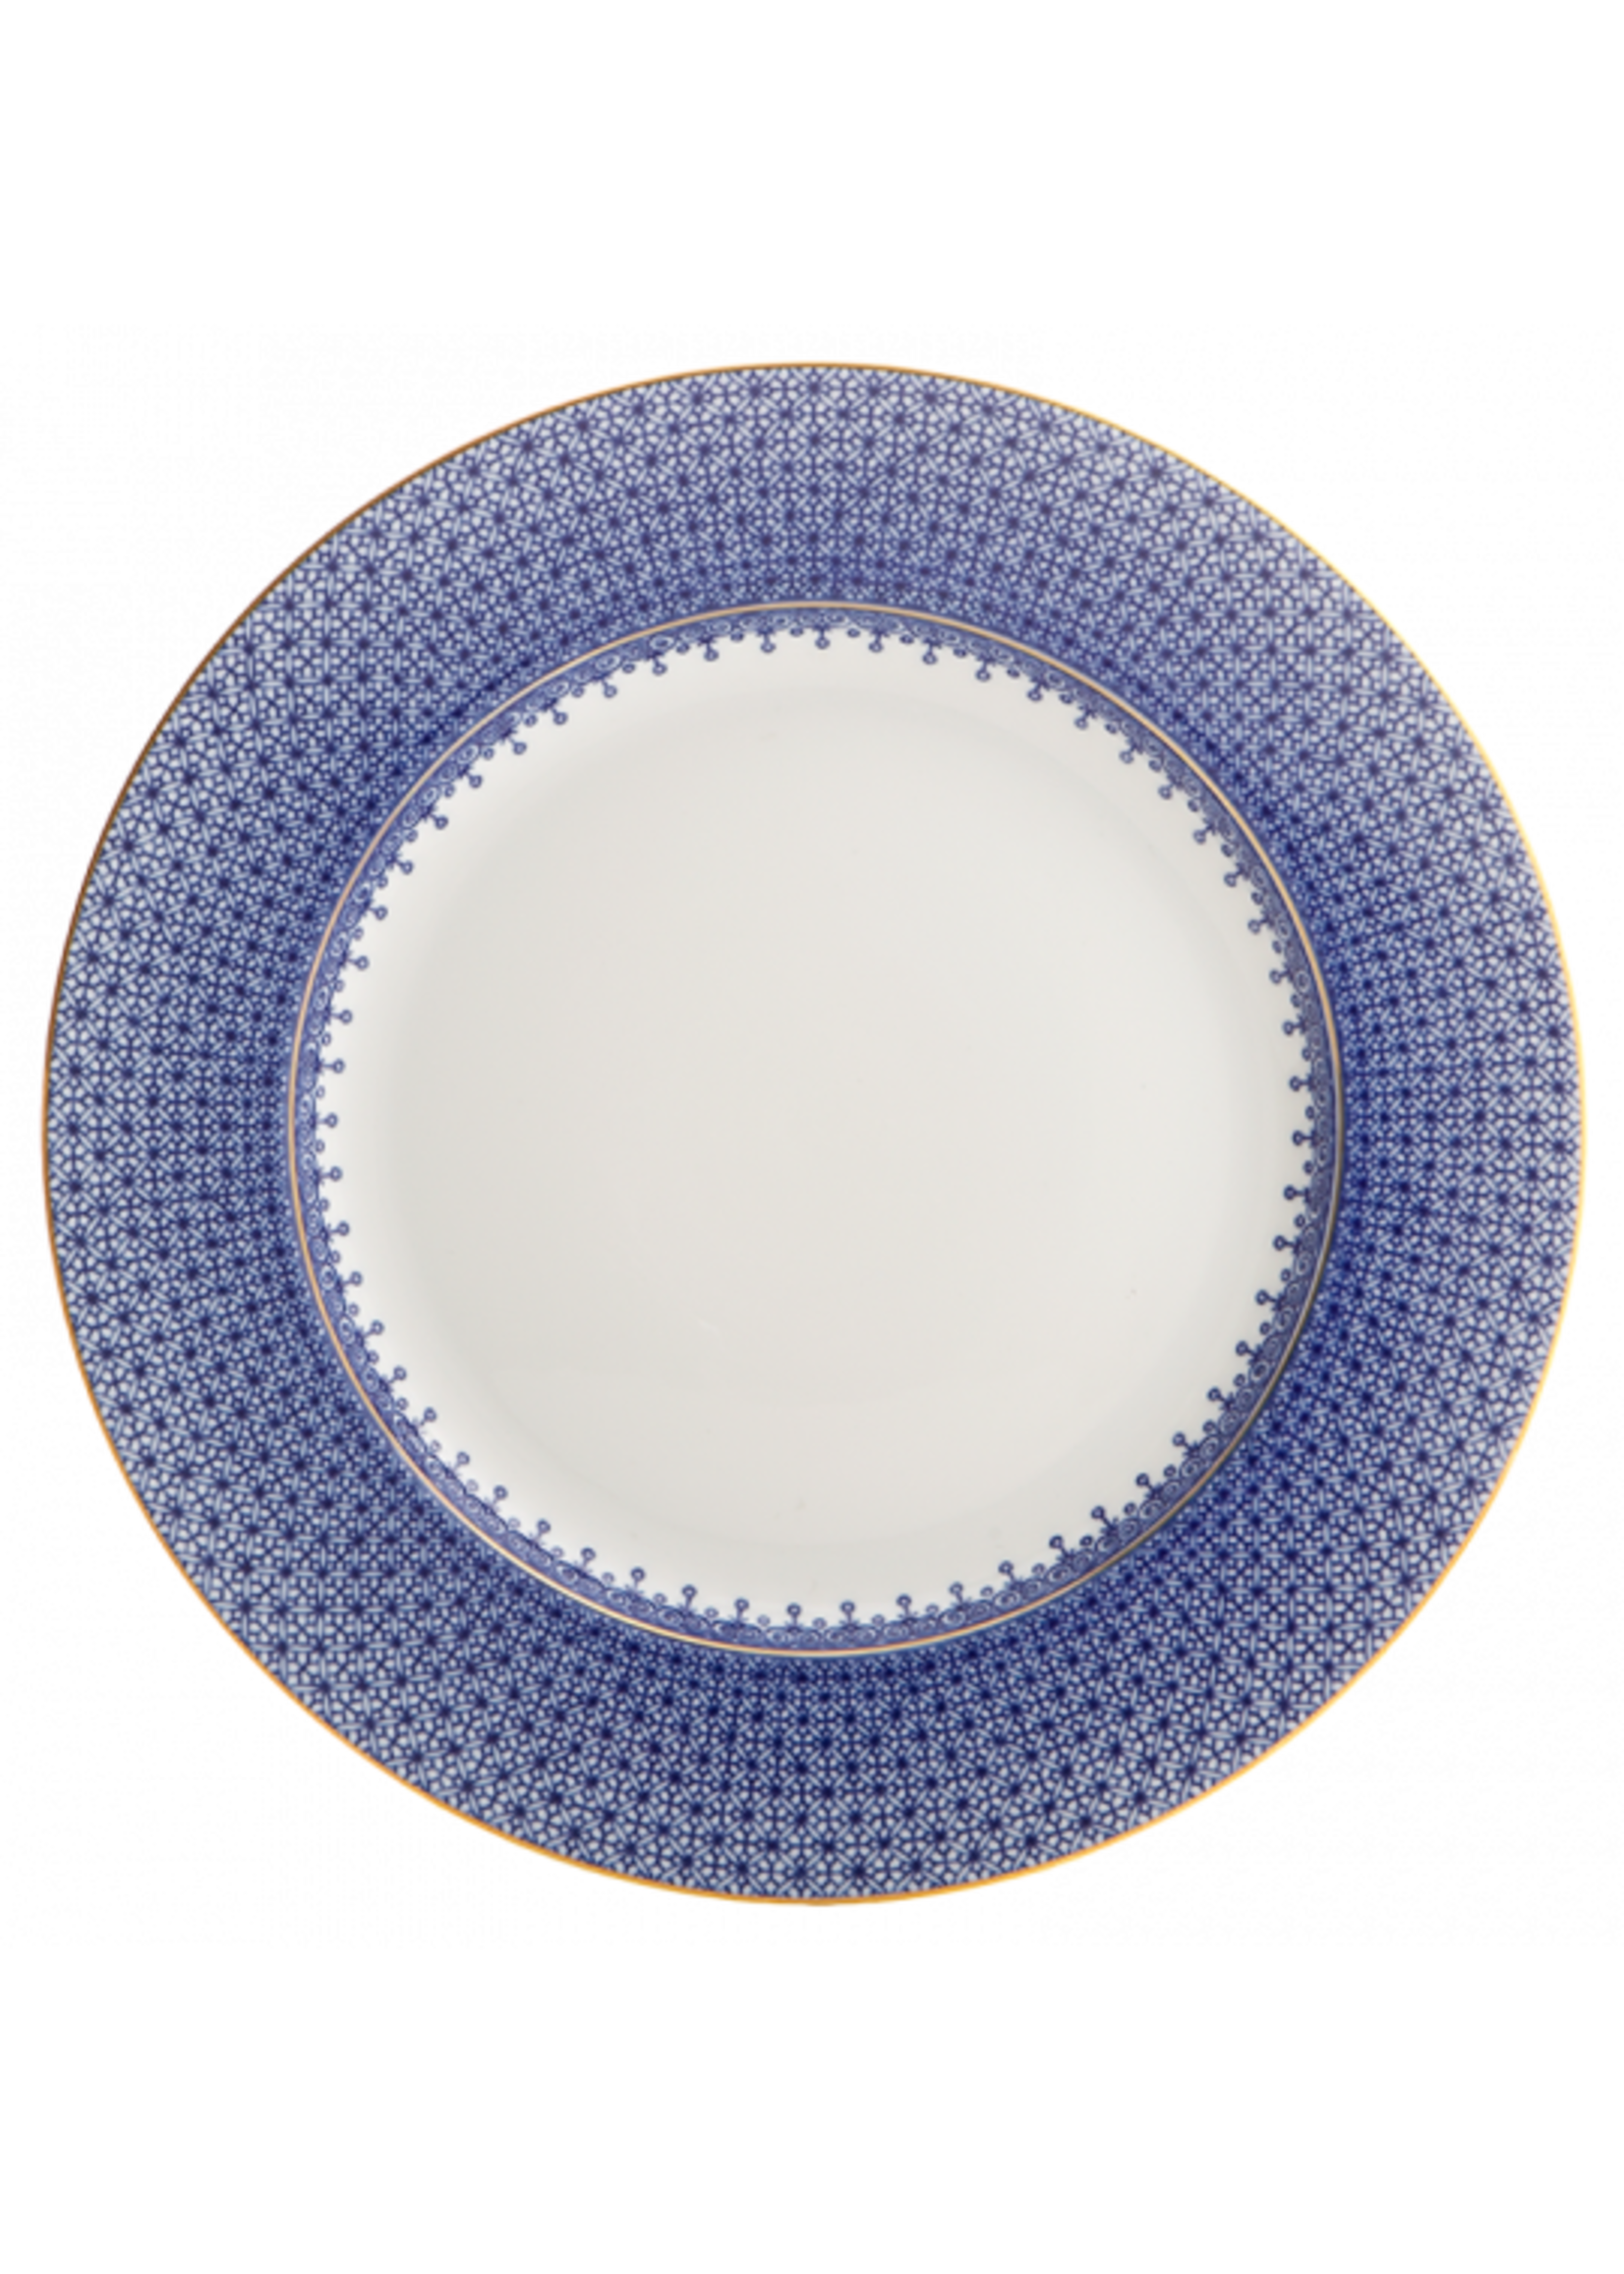 Mottahedeh Mottahedeh Blue Lace Dinner Plate